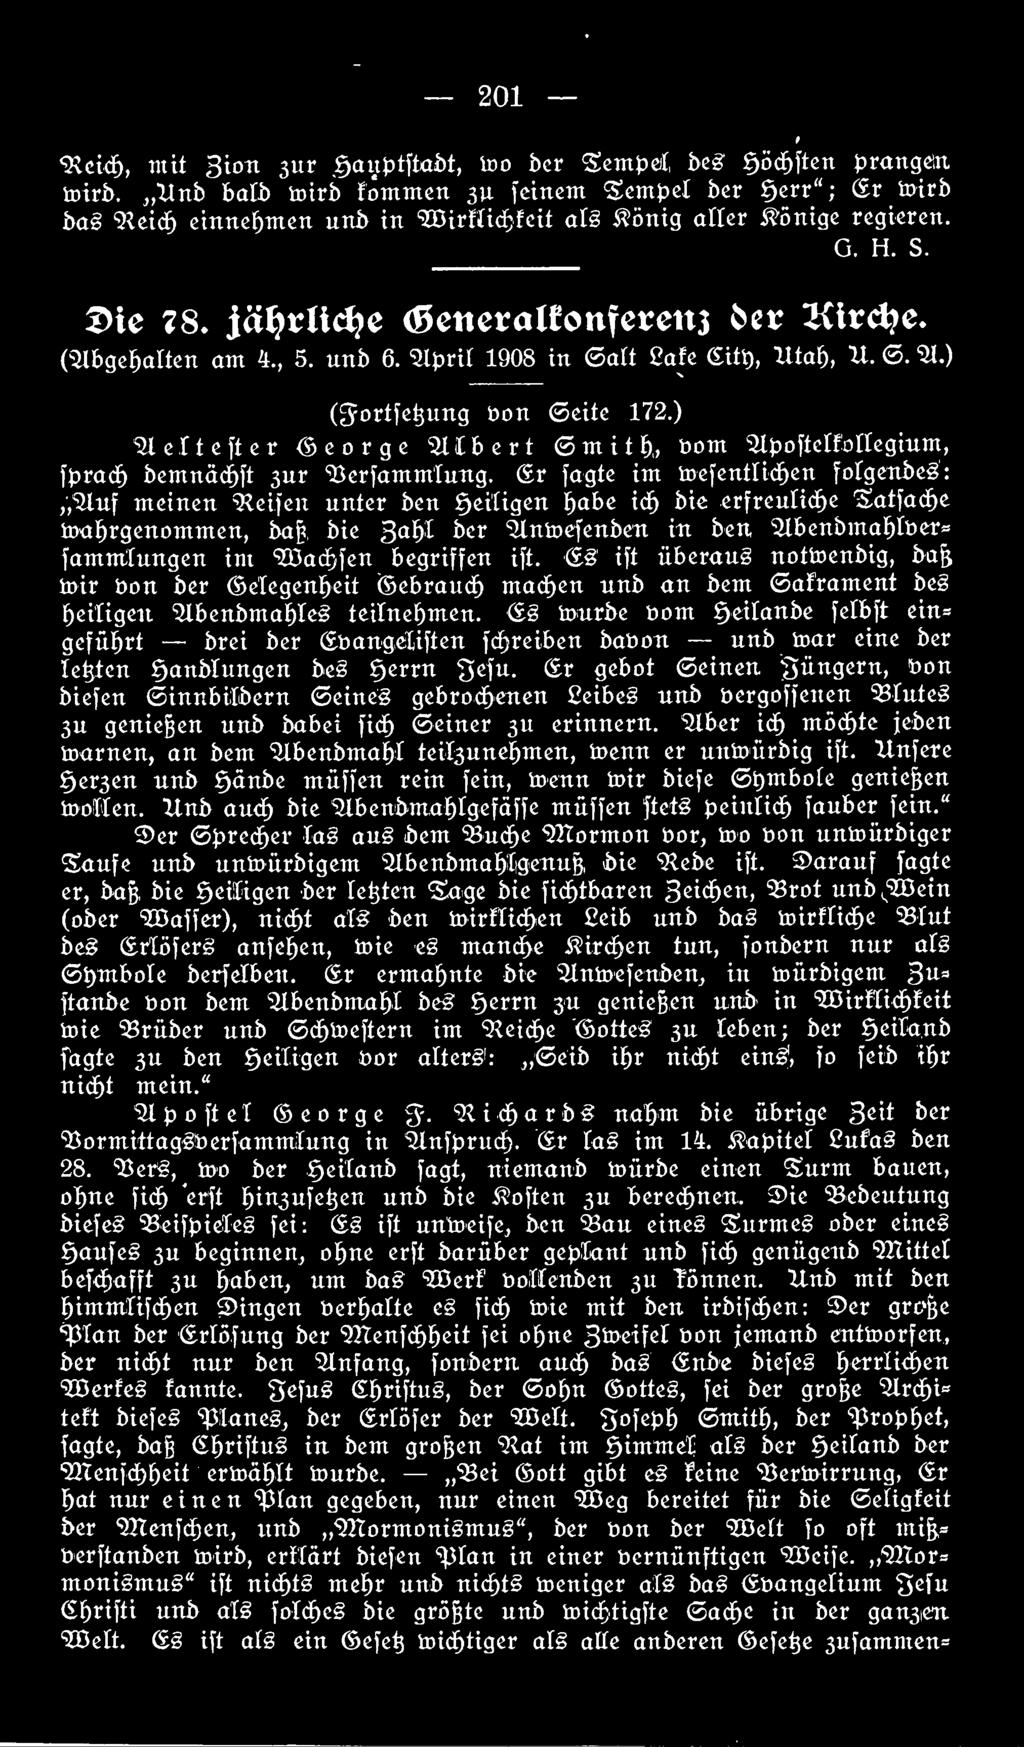 (Vlbgebalten am 4., 5. nnb 6. Vlbrit 1908 in (Satt Cafe (Sitt), Utab, H.. 5t.) (Jortfetjung bon (Seite 172.) vierteltet eorge VUbert mit & bom Vlboftetfollegium, fbrad) bemnäcbft 3ur "ibcrfammtung.